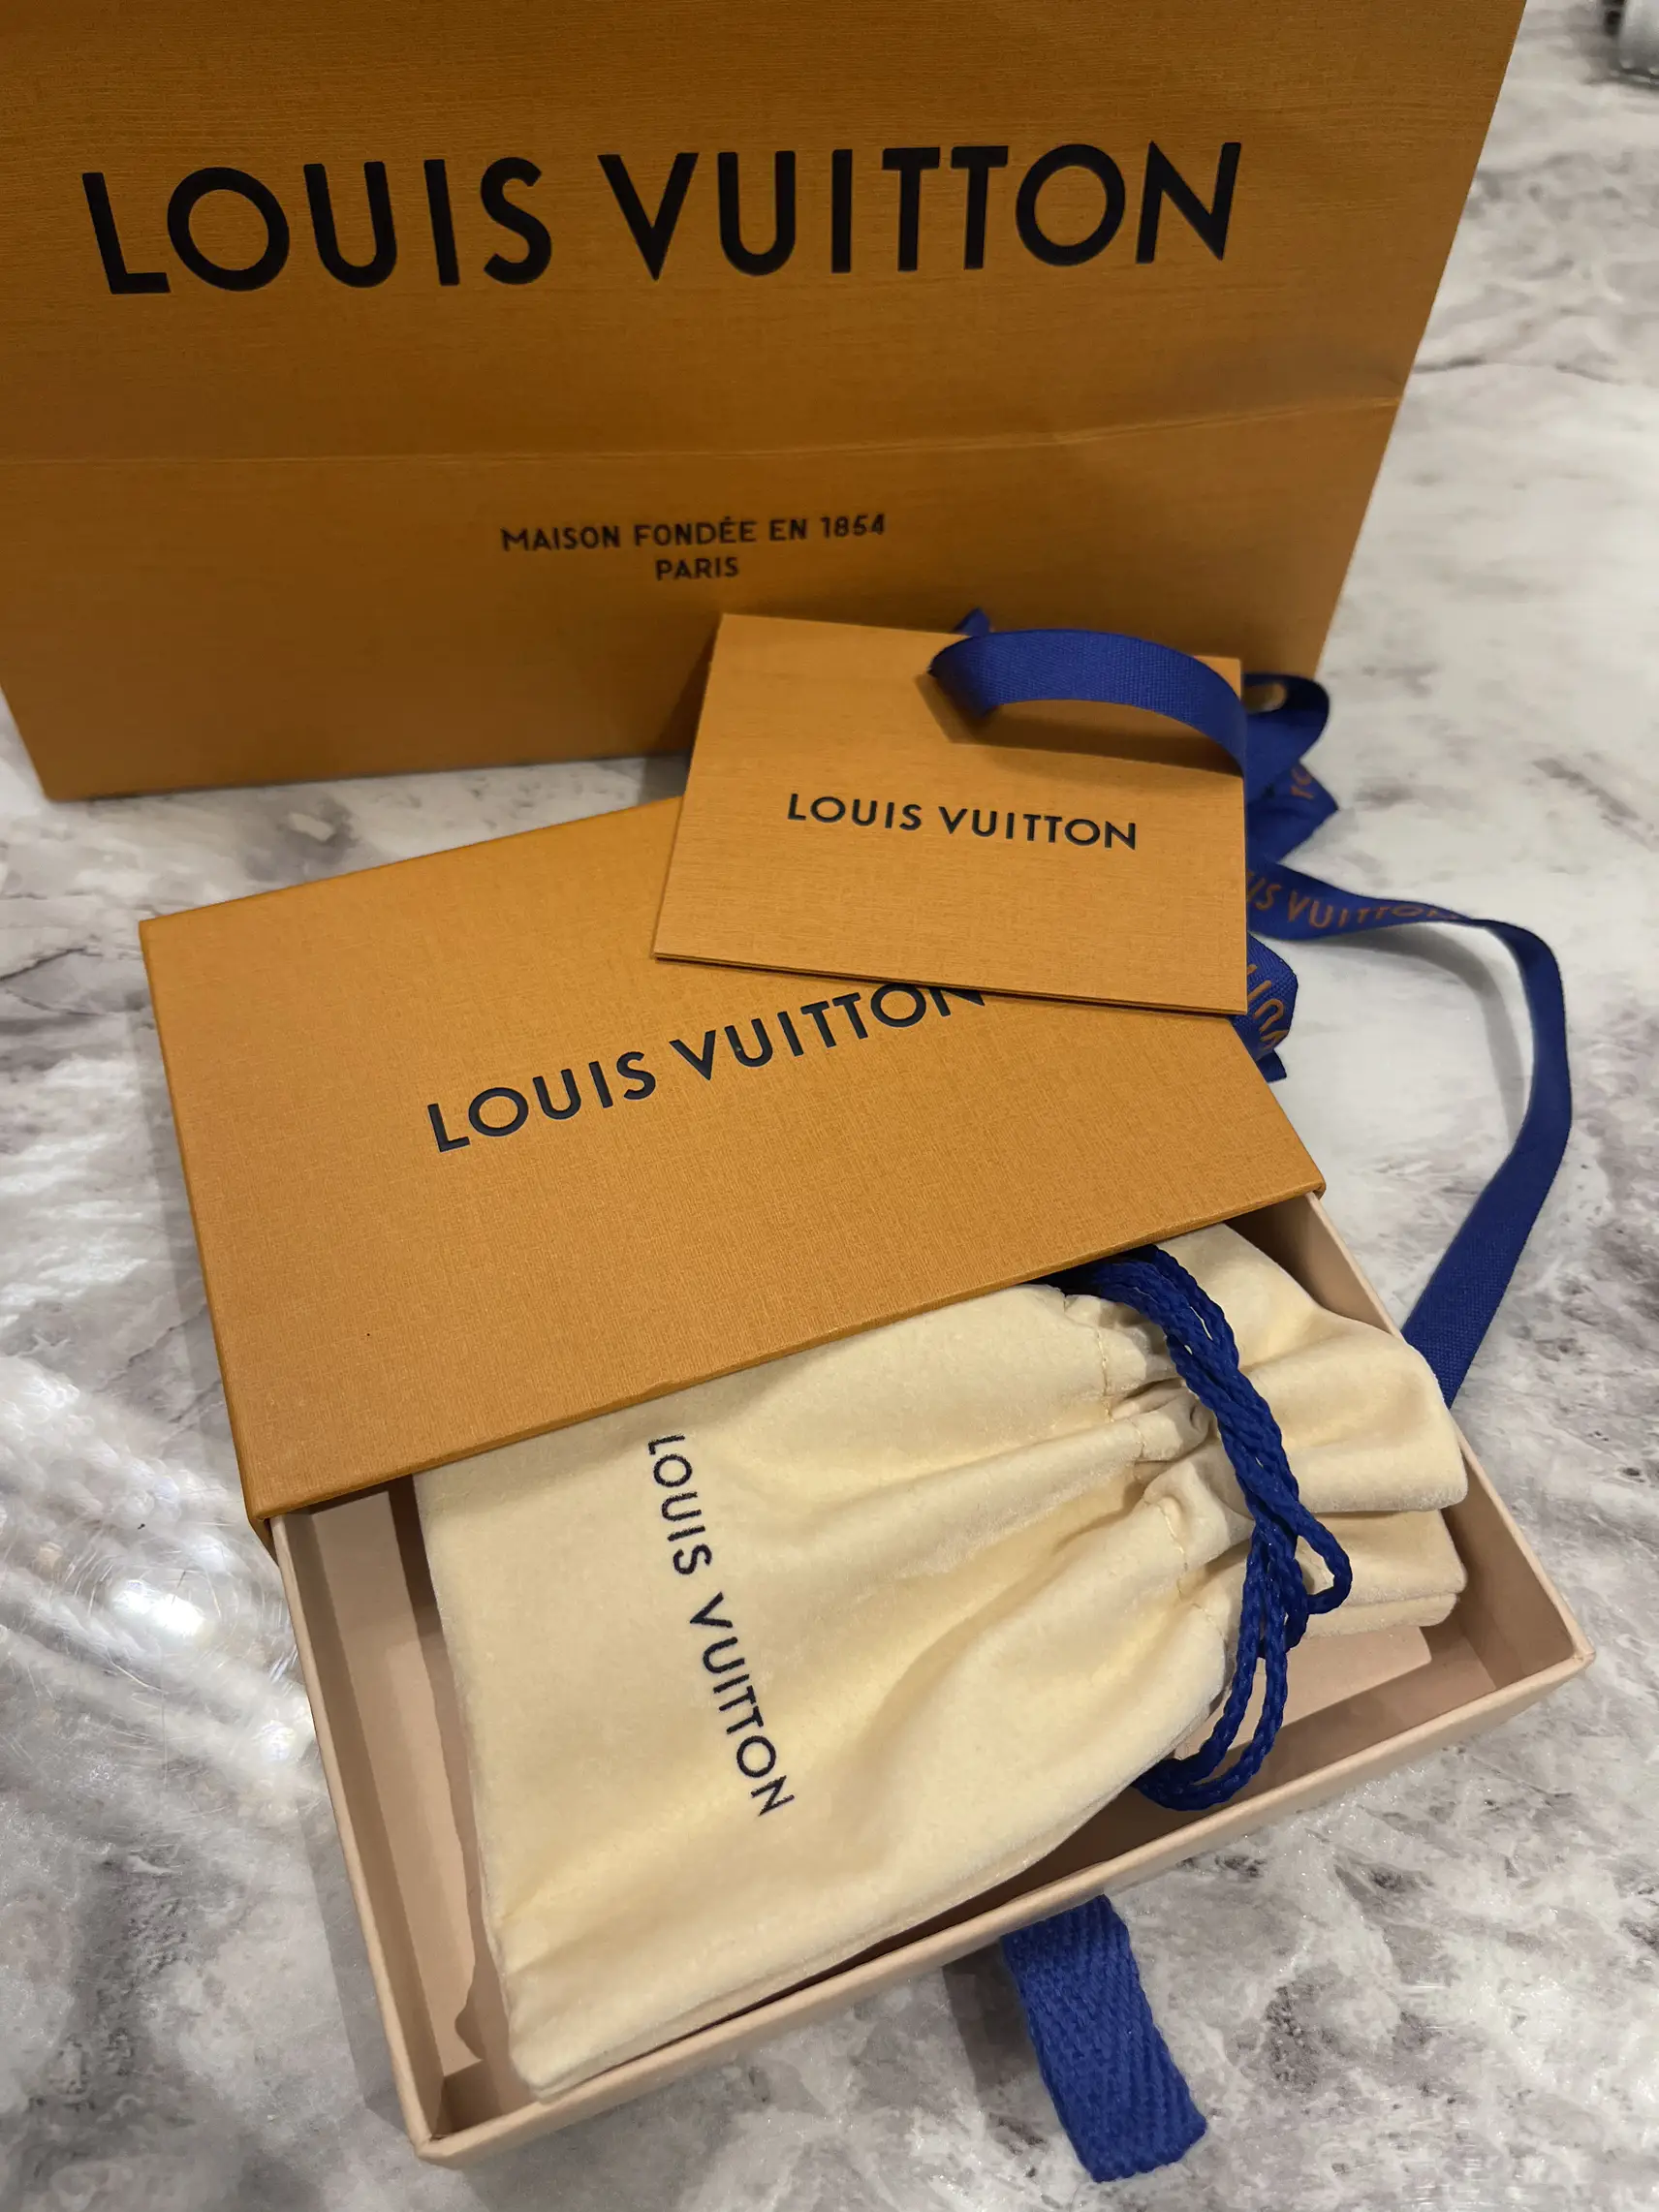 NANO MONOGRAM BRACELET Louis Vuitton ?, Gallery posted by Karina Jovita